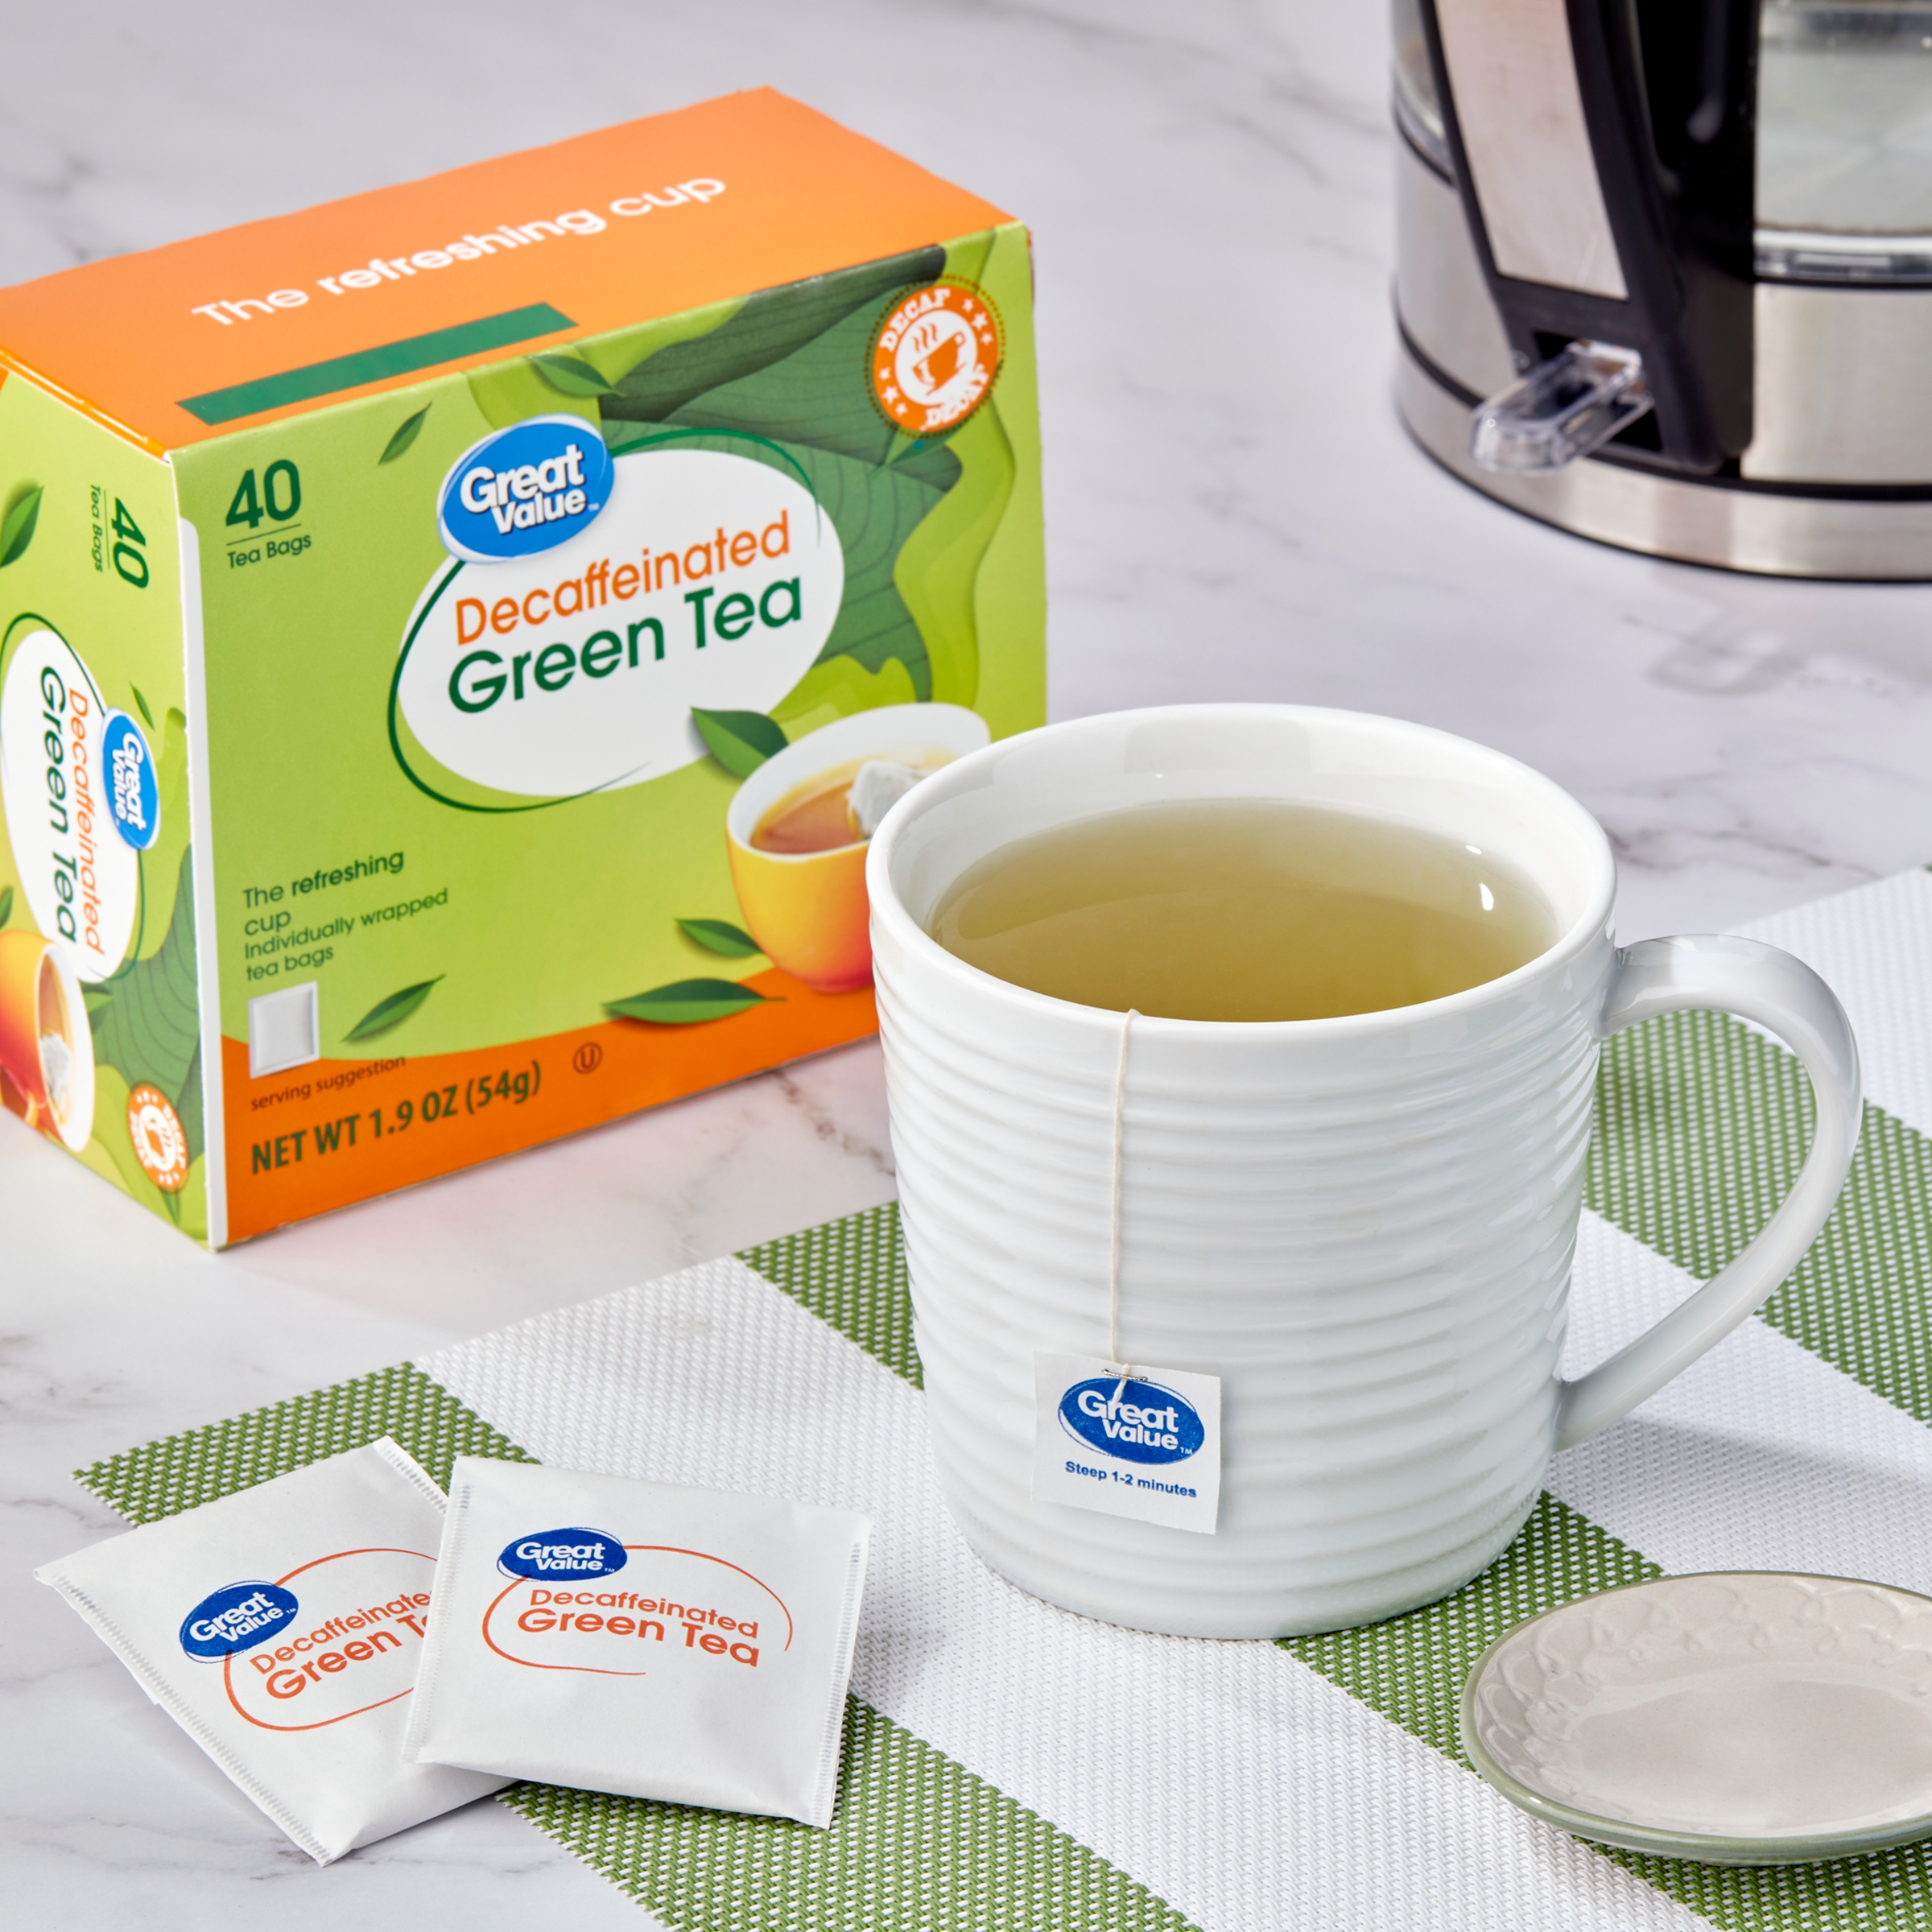 Great Value Decaffeinated Green Tea, Tea Bags, 1.9 oz, 40 Count - image 2 of 7